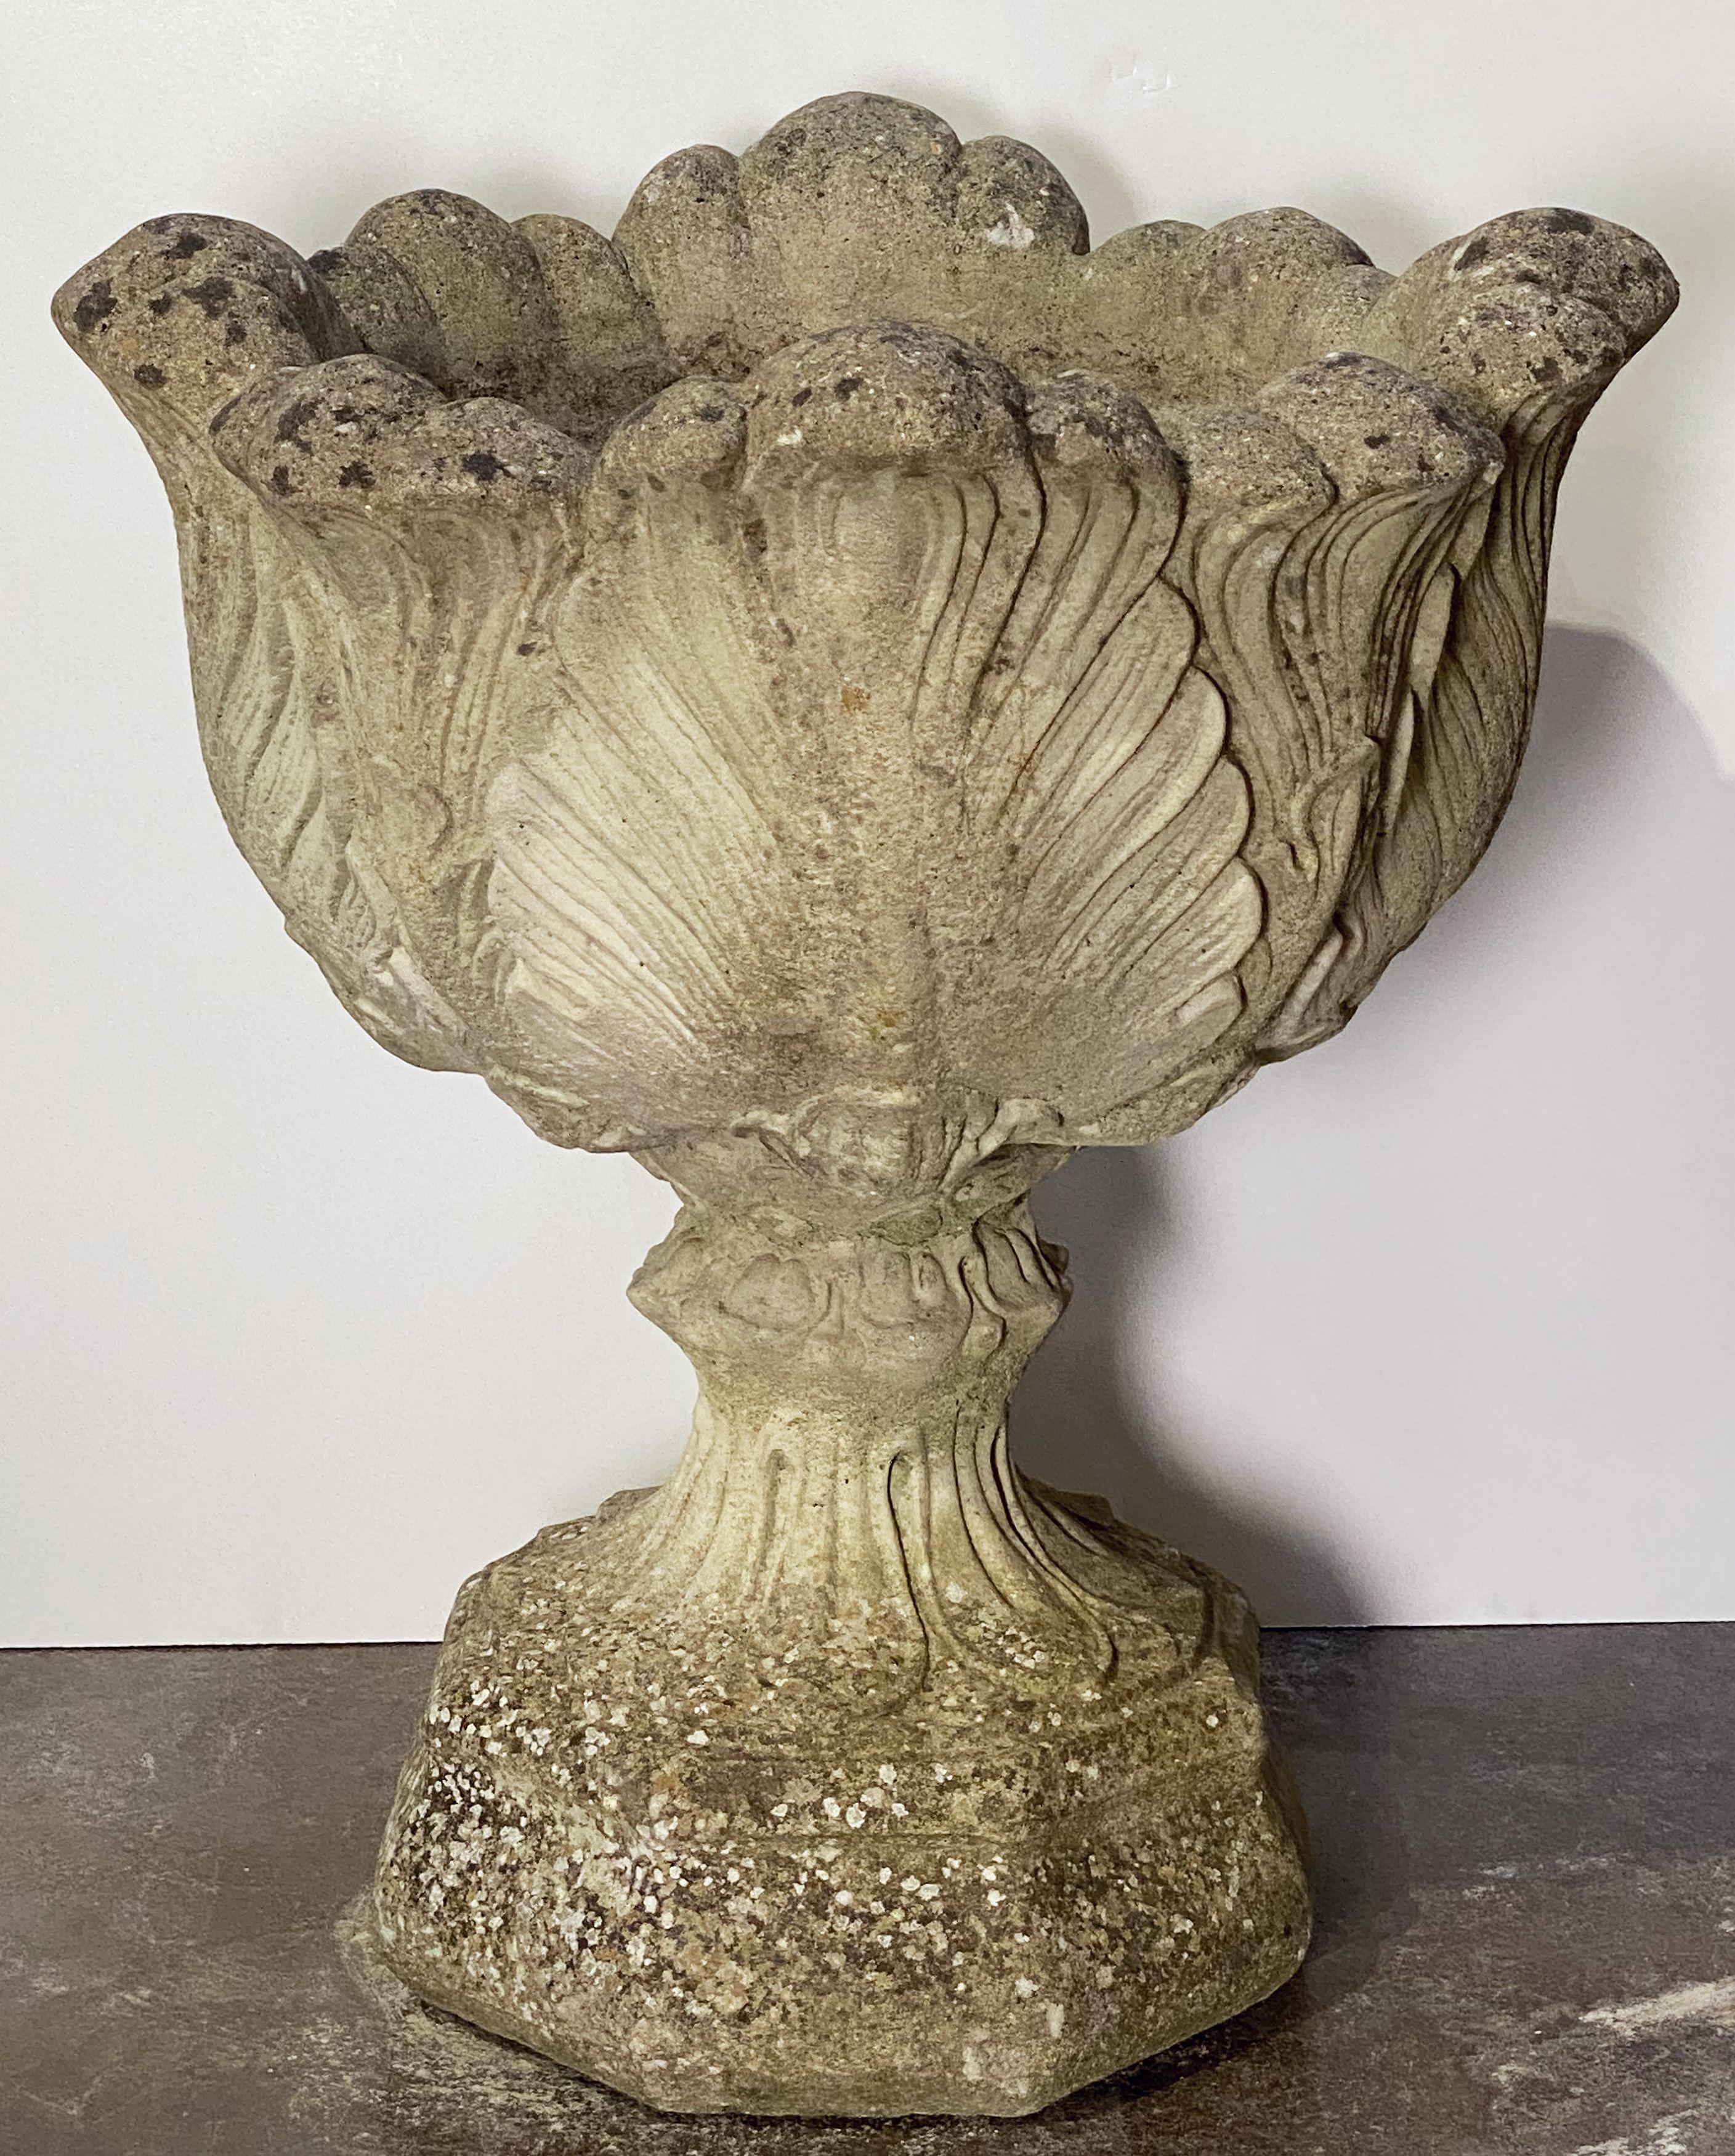 English Garden Stone Urn or Planter Pot on Plinth with Acanthus Leaf Design 2